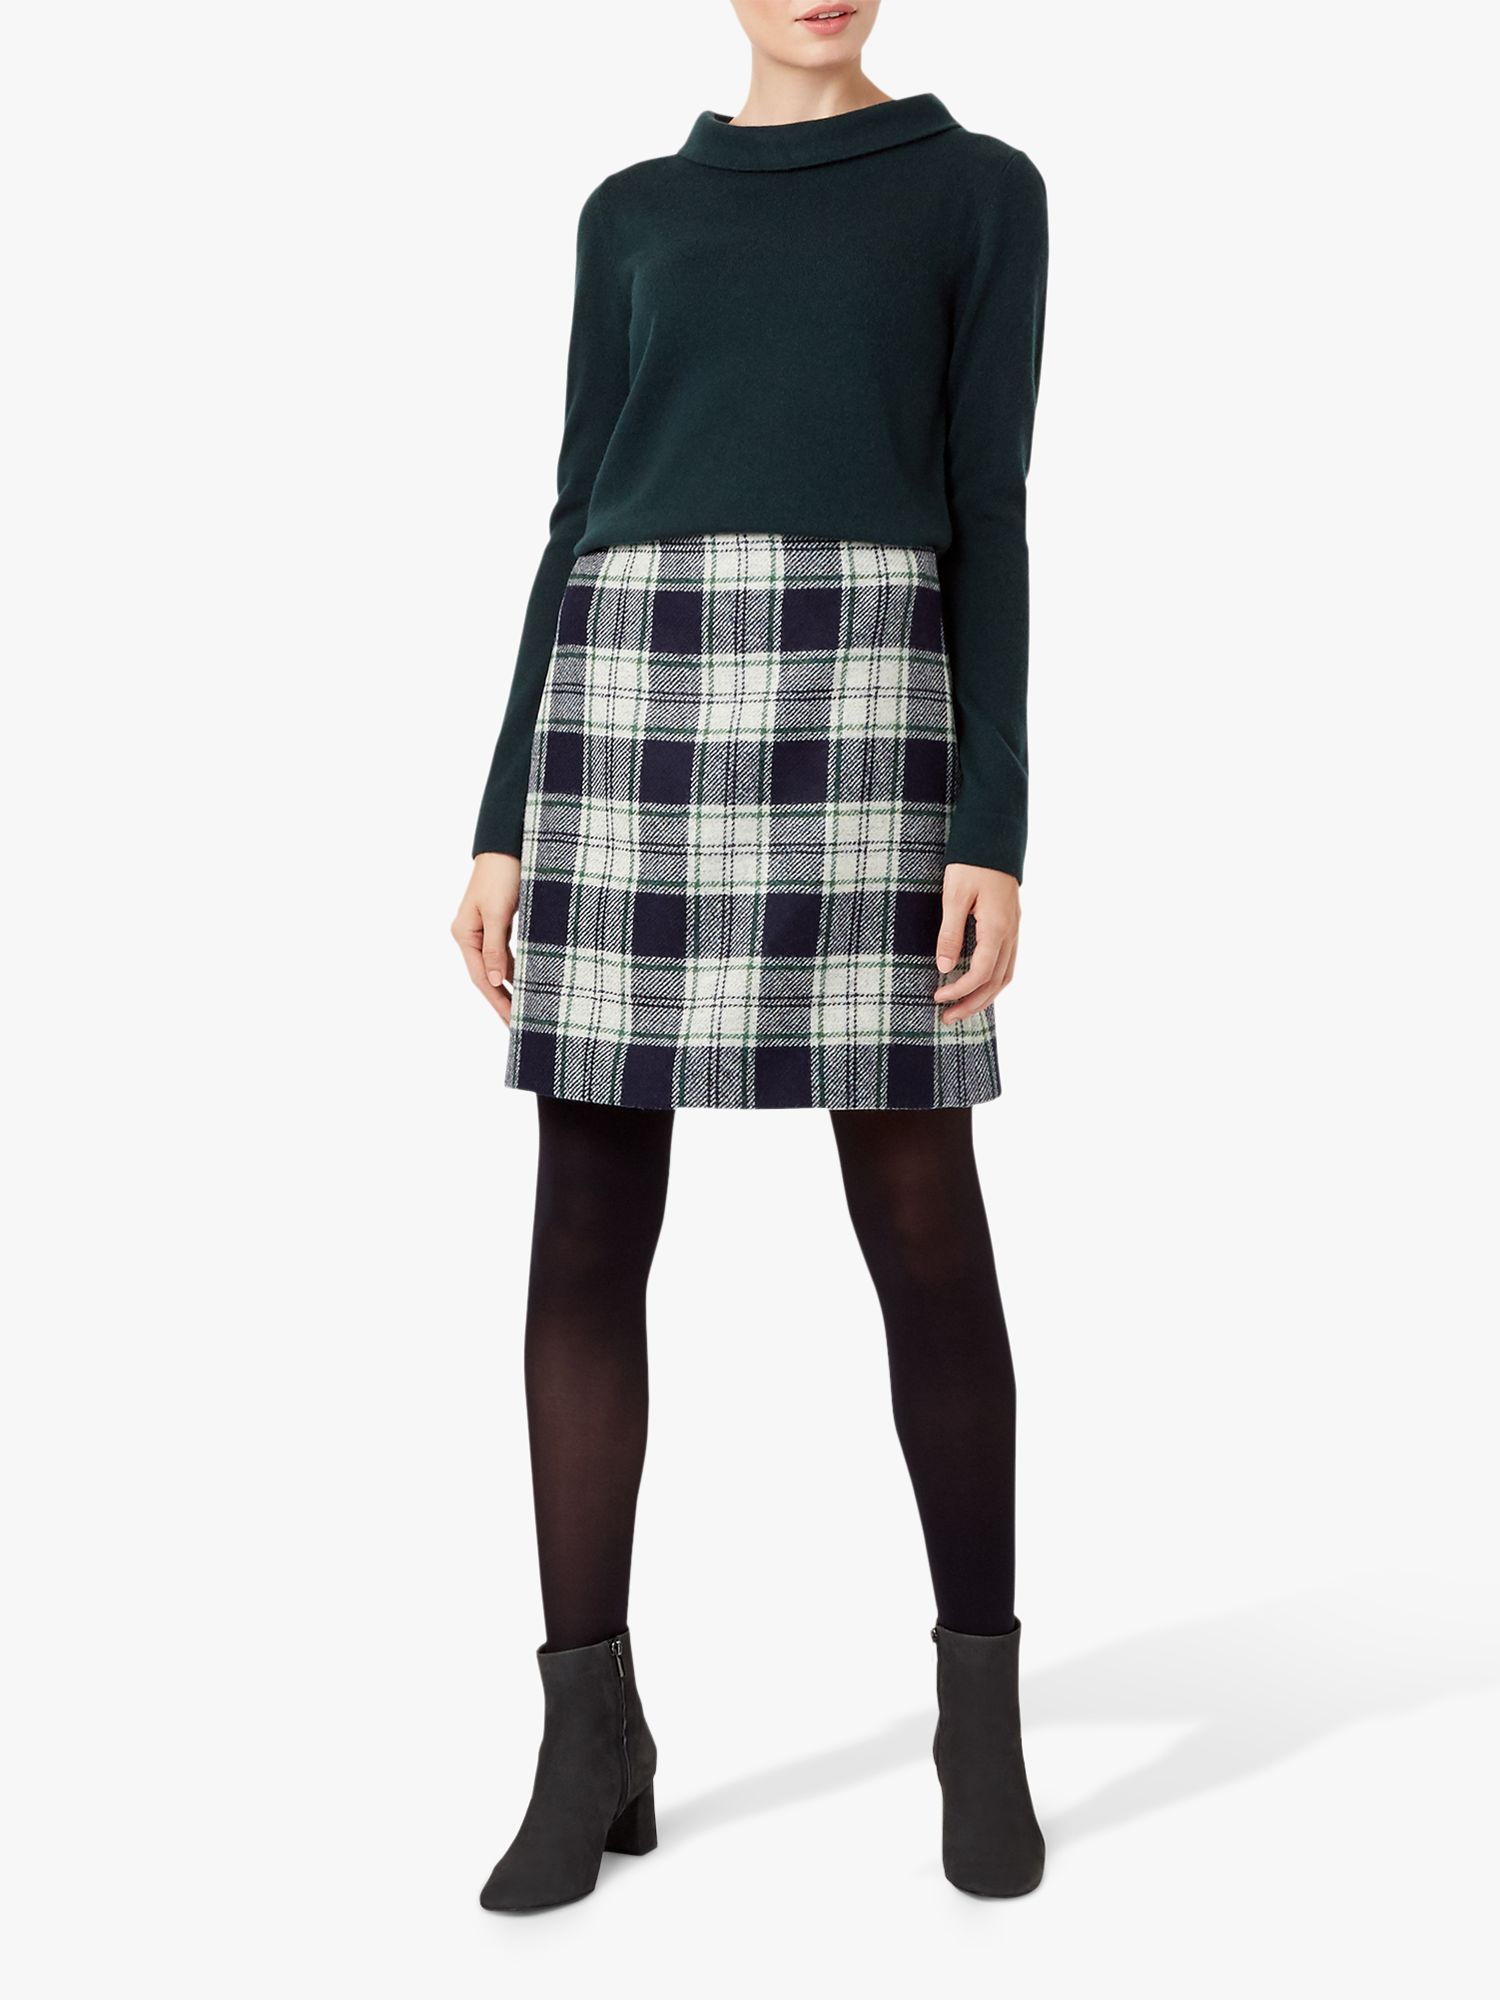 Hobbs Elea Wool Mini Skirt, Ivory/Green at John Lewis & Partners